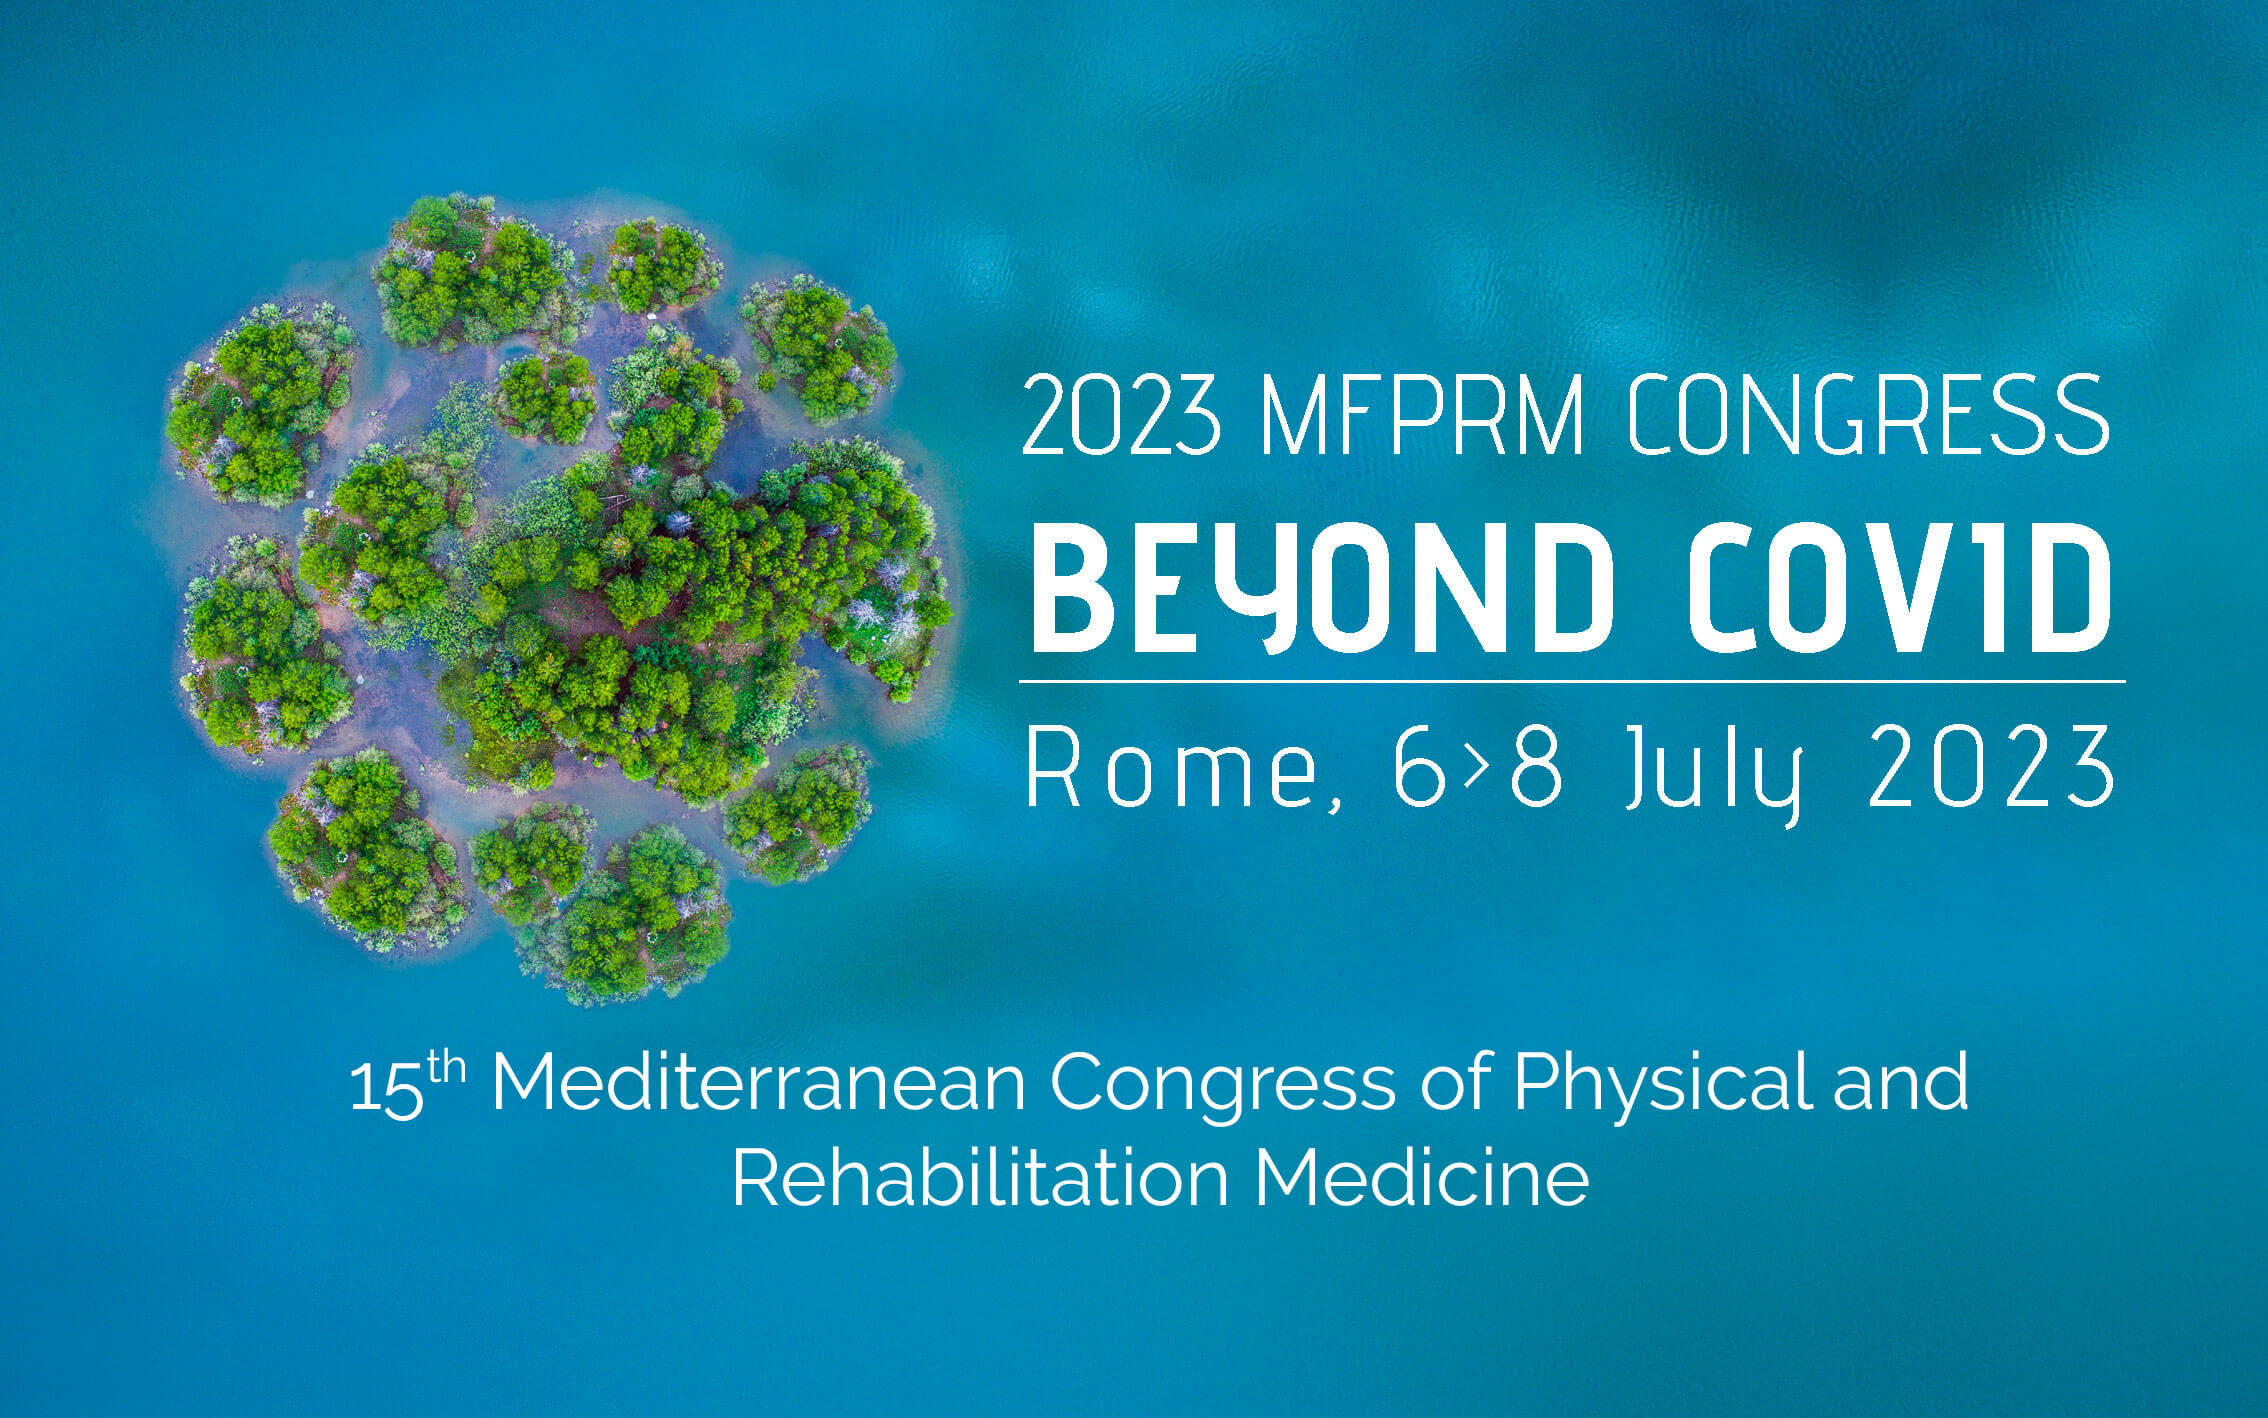 MFPRM Congress Beyond Covid: 6 - 8 July 2023.